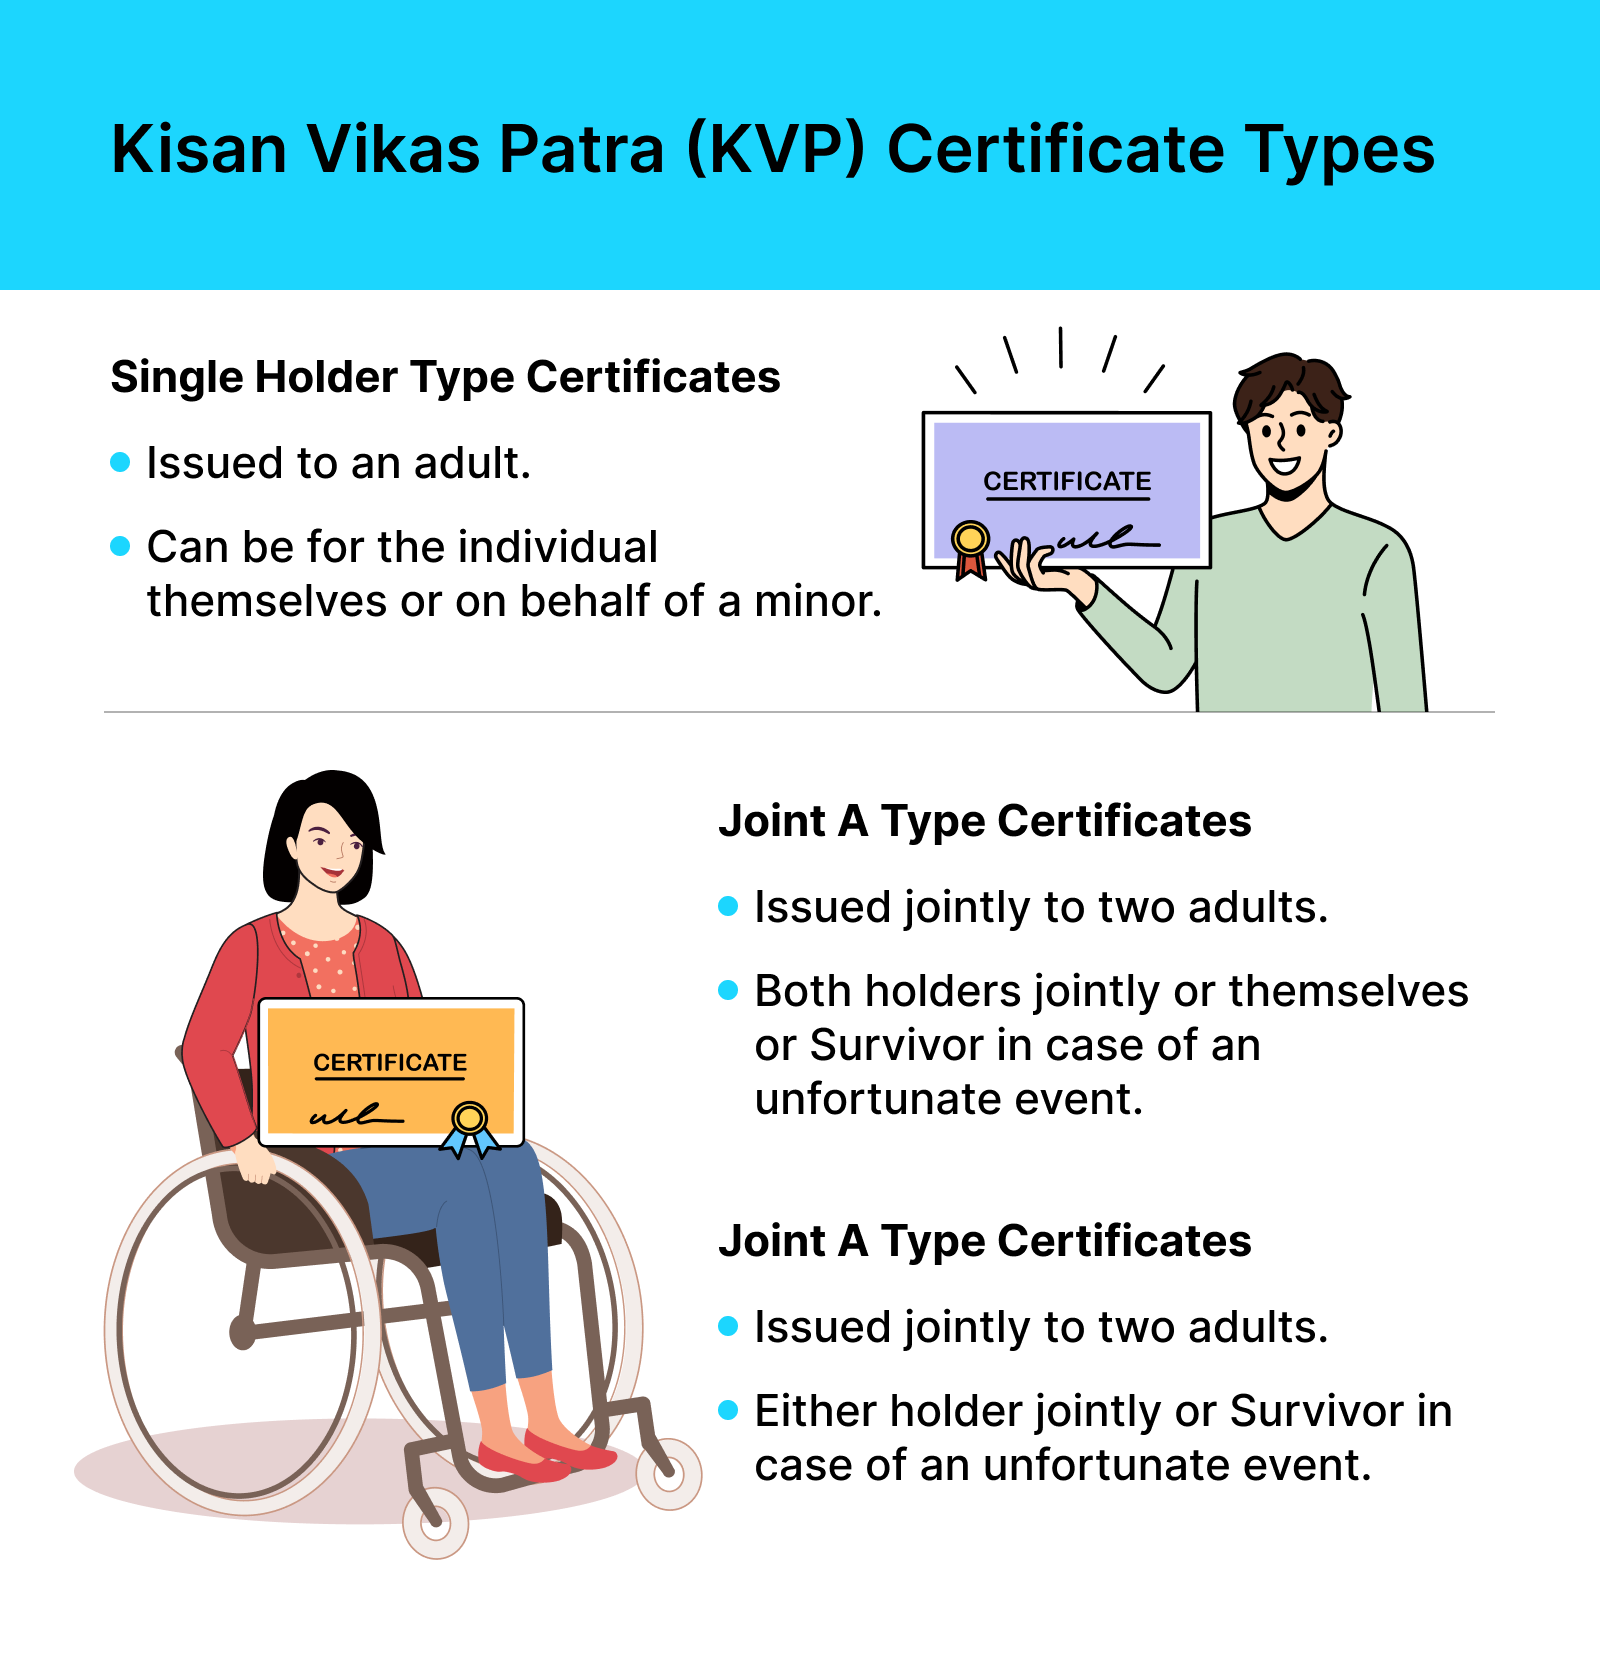 Types of Kisan Vikas Patra Certificates